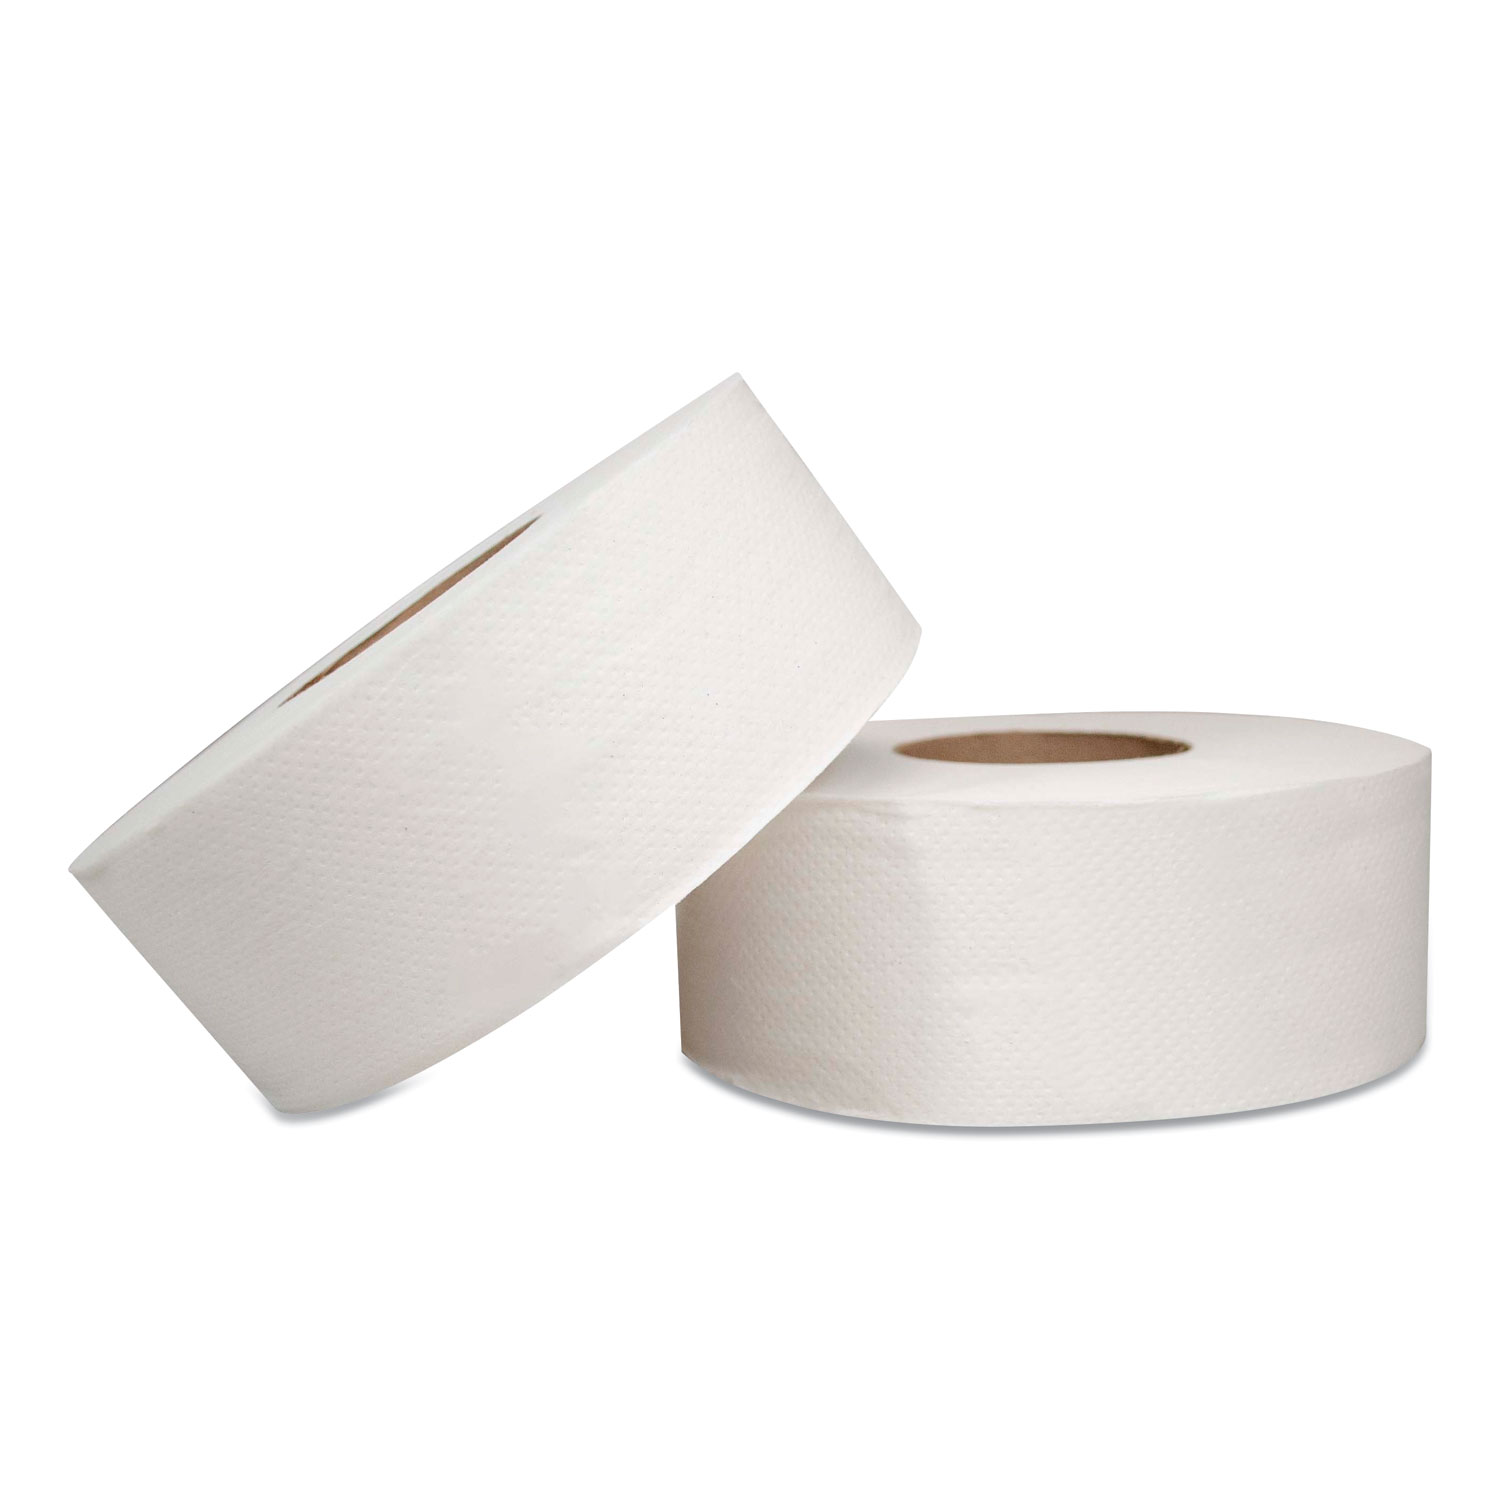  Morcon Tissue MOR 129X Jumbo Bath Tissue, Septic Safe, 2-Ply, White, 500 ft, 12/Carton (MOR129X) 